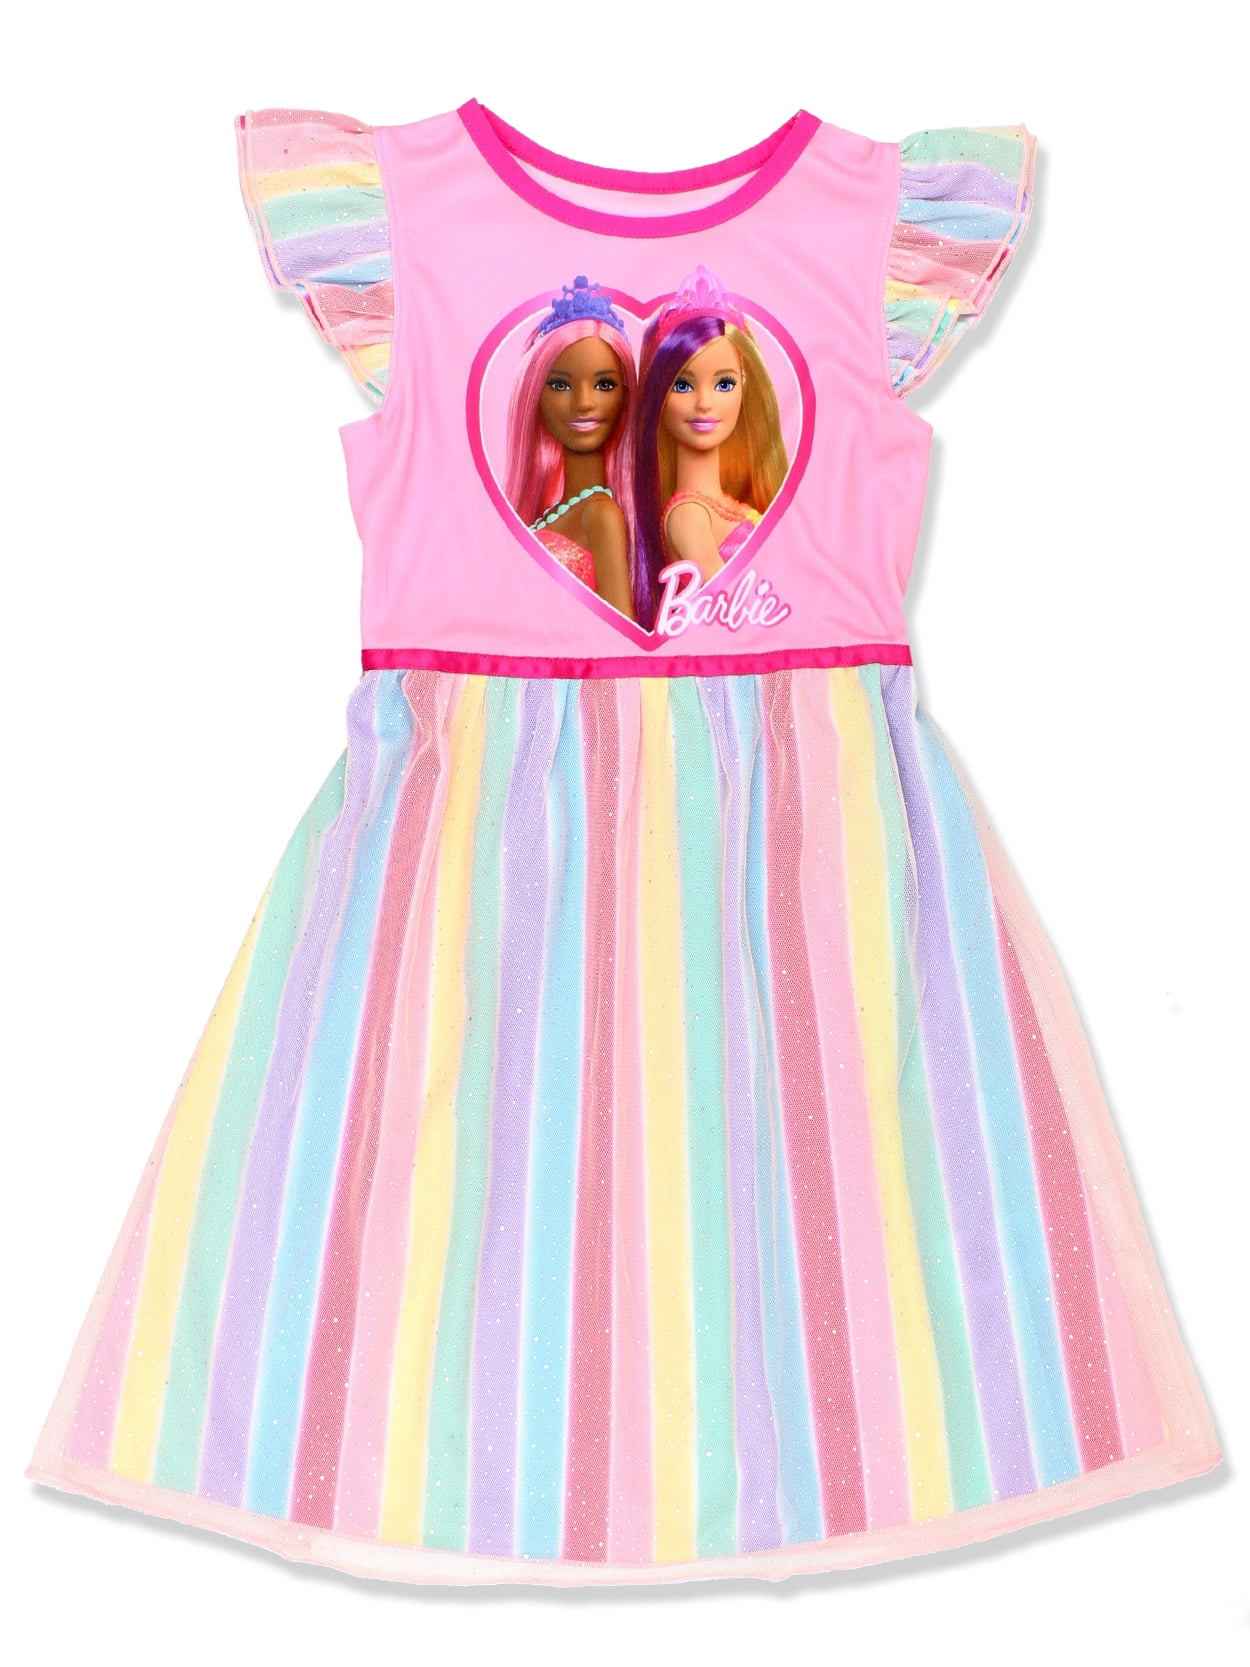 Mattel Women's and Women's Plus Size Barbie Plush Sleep Pants, Sizes XS-3X  